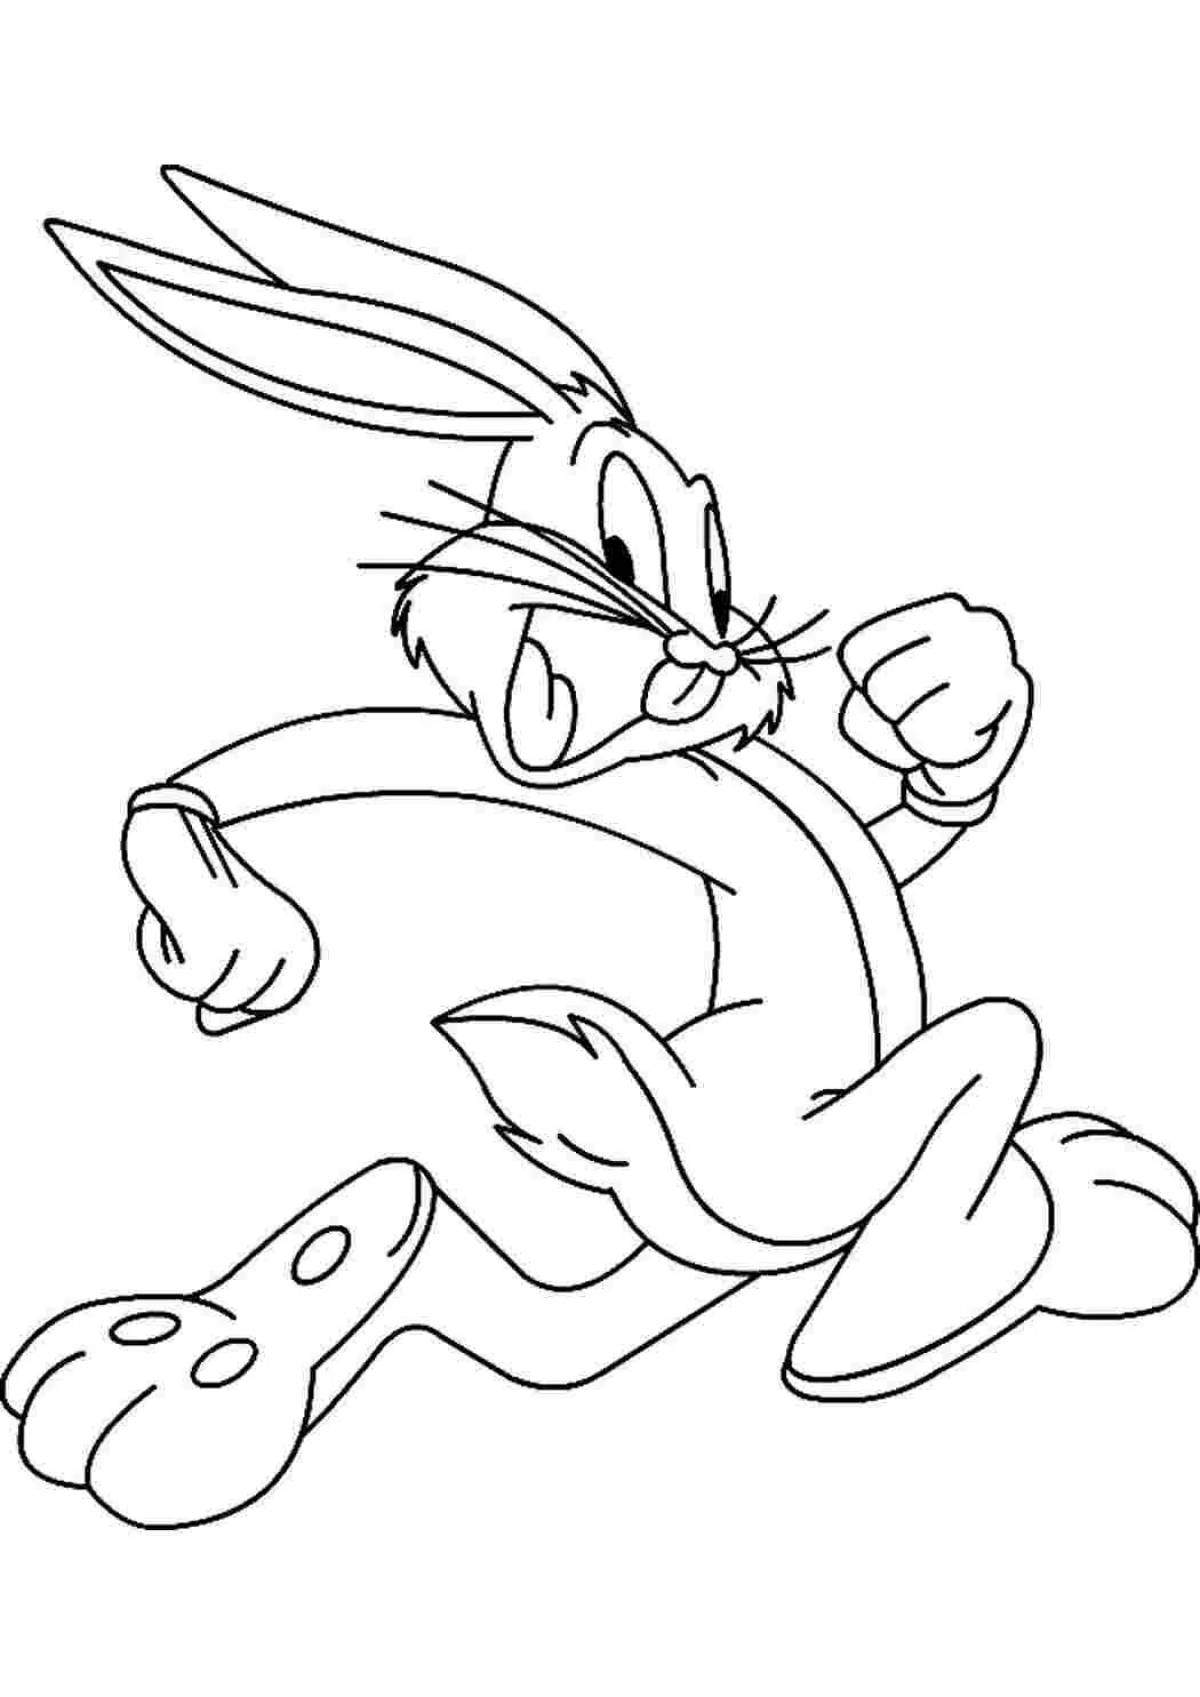 Big-legged rabbit cartoon coloring book